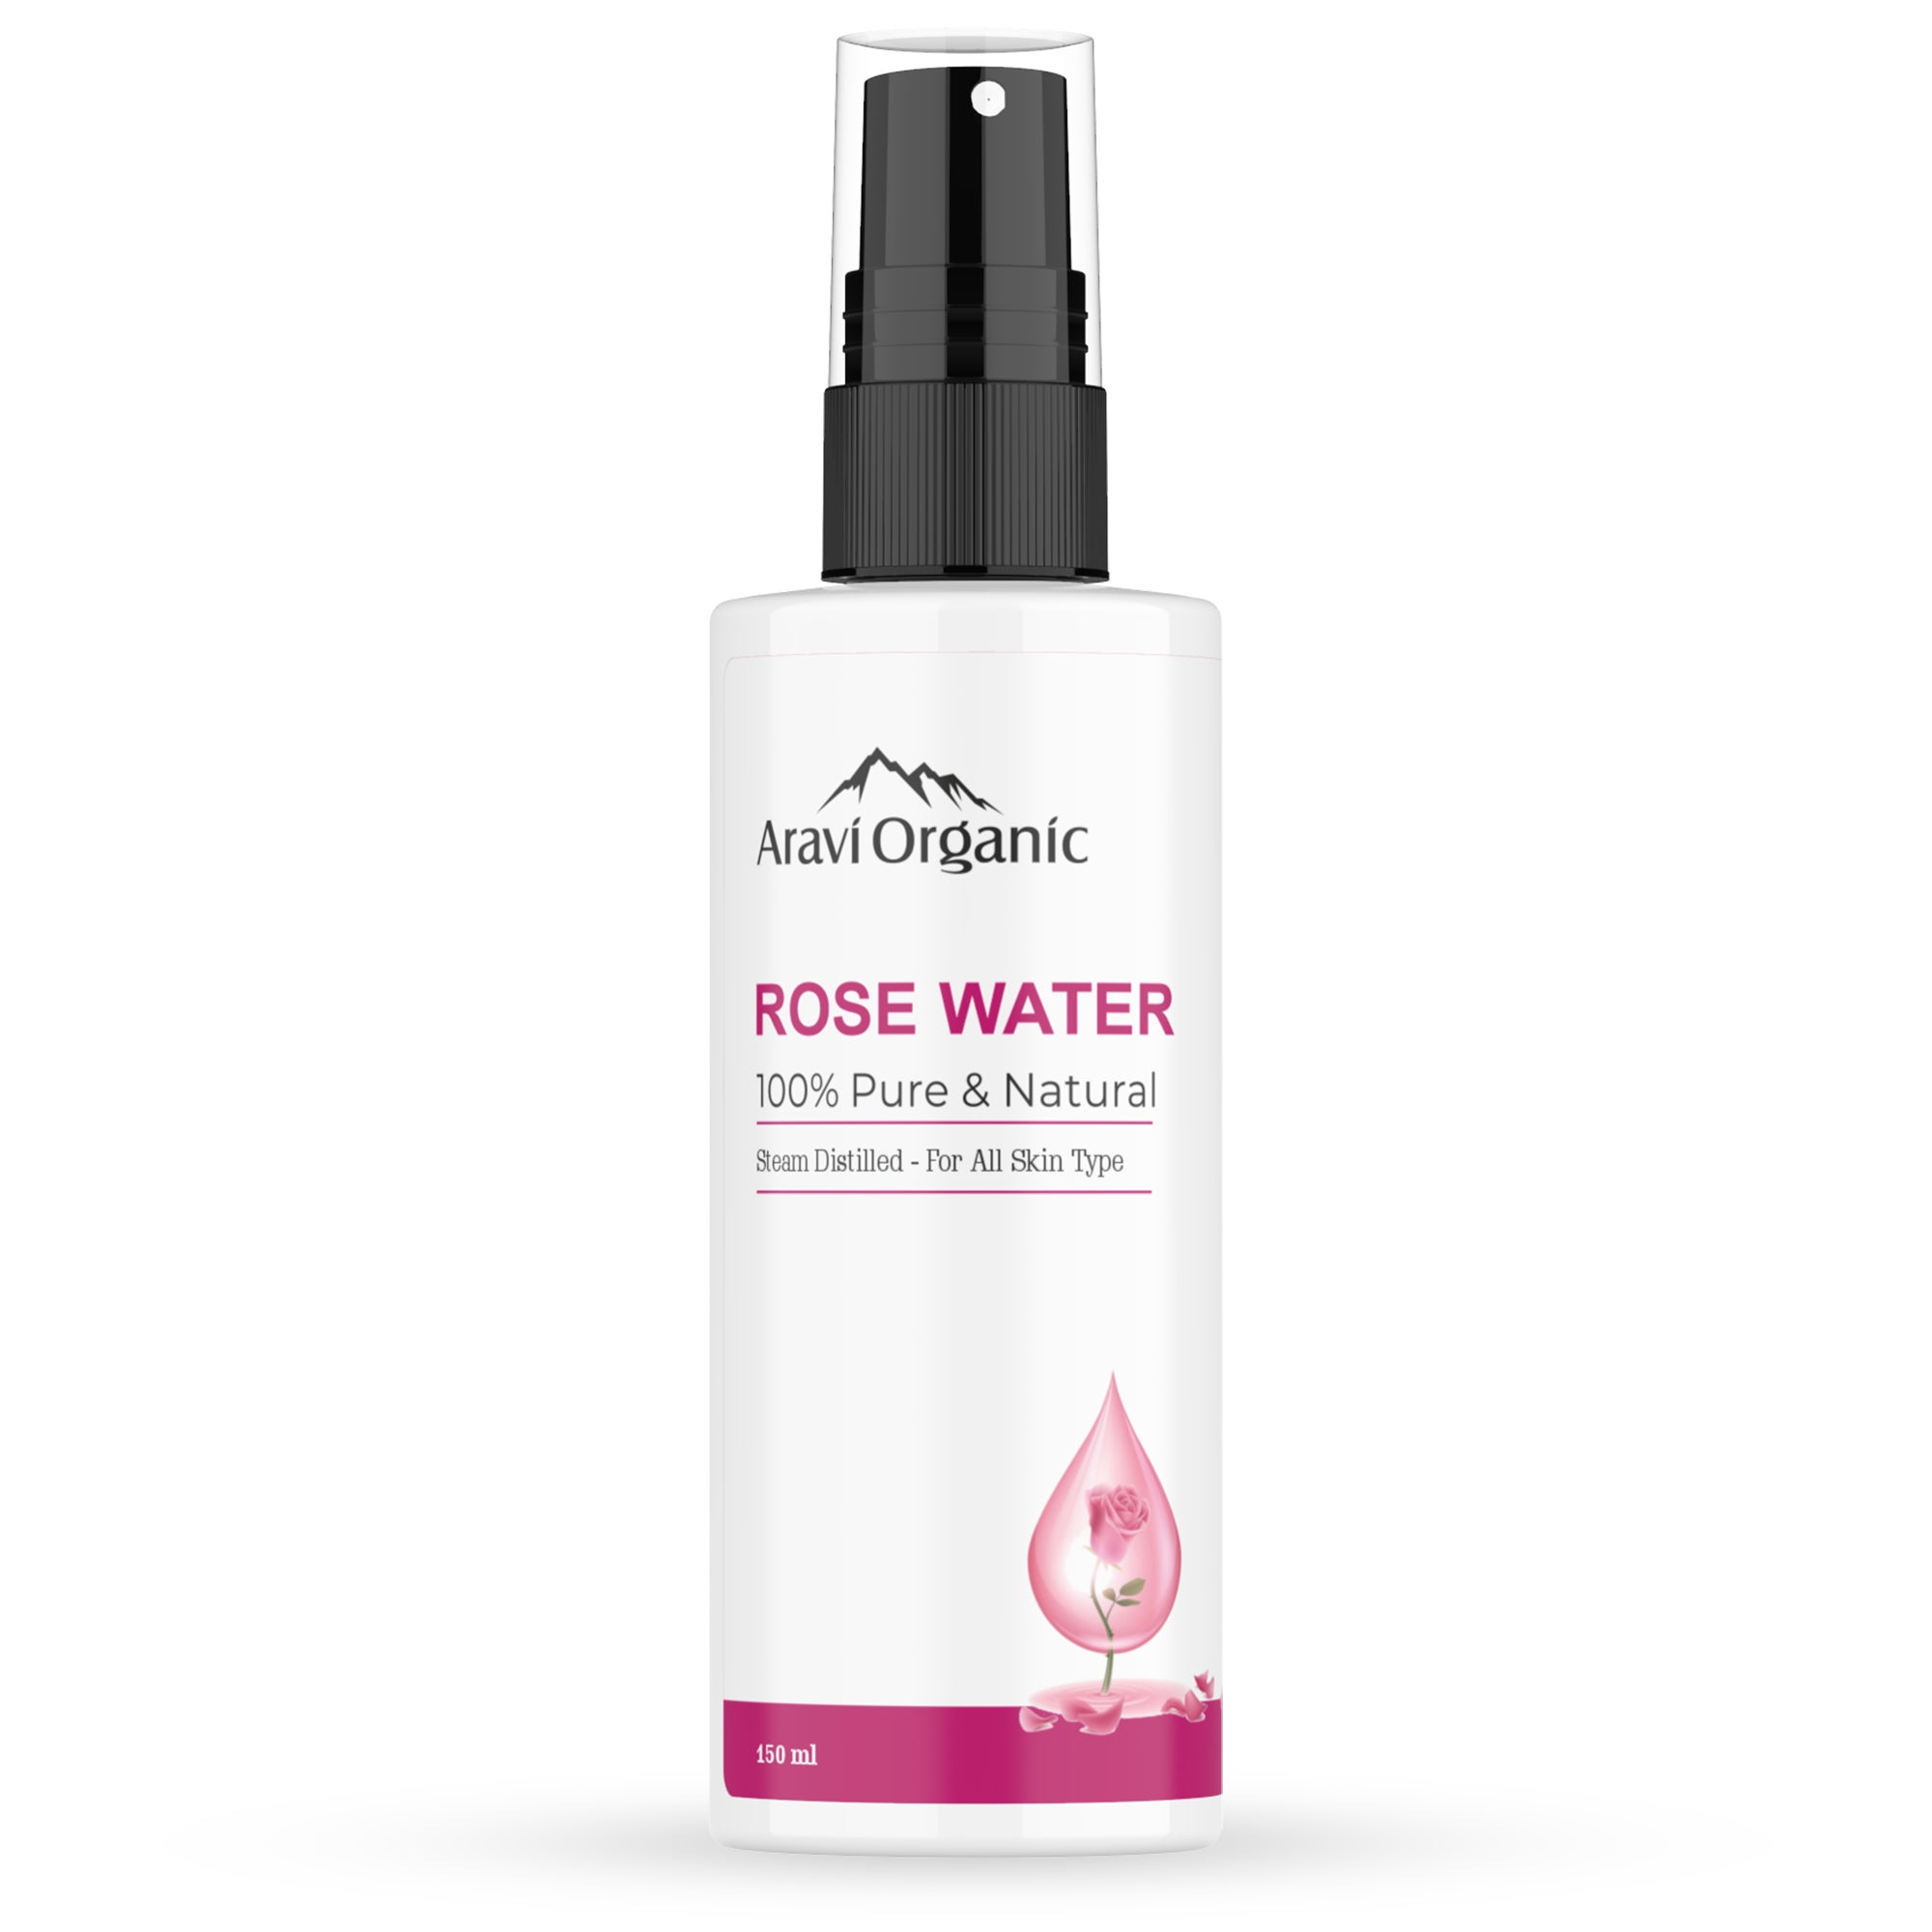 Aravi Organic 100% Steam Distilled Rose Water Face Toner Spray, Make Up Remover & Hydration